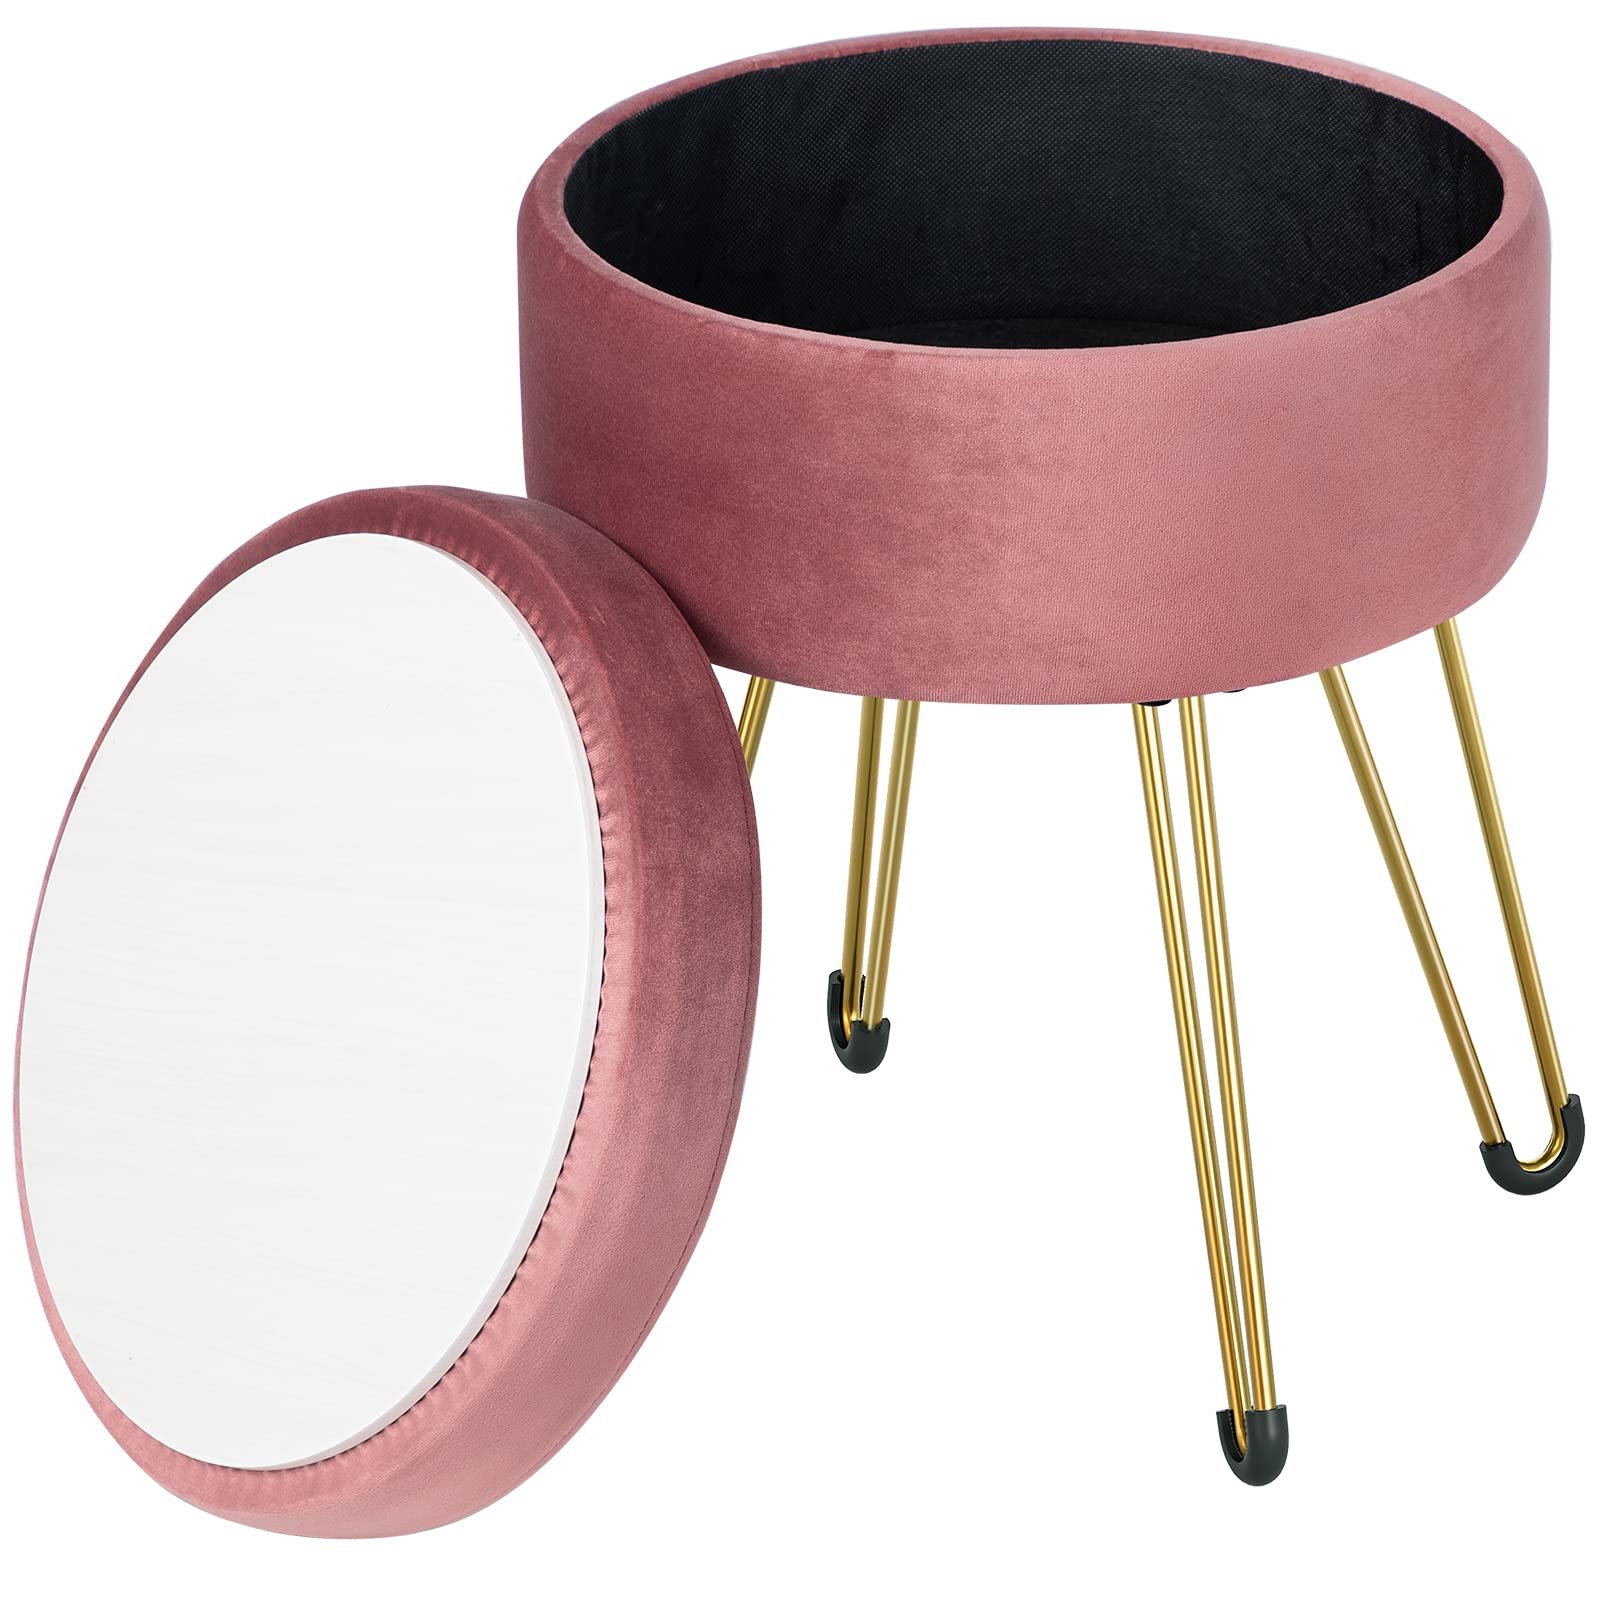 HOOBRO Vanity Stool with Storage, Ottoman Stool, Round Vanity chair Sponge cushion, 4 Metal Legs, Supports 287 lb, Footrest, Mul